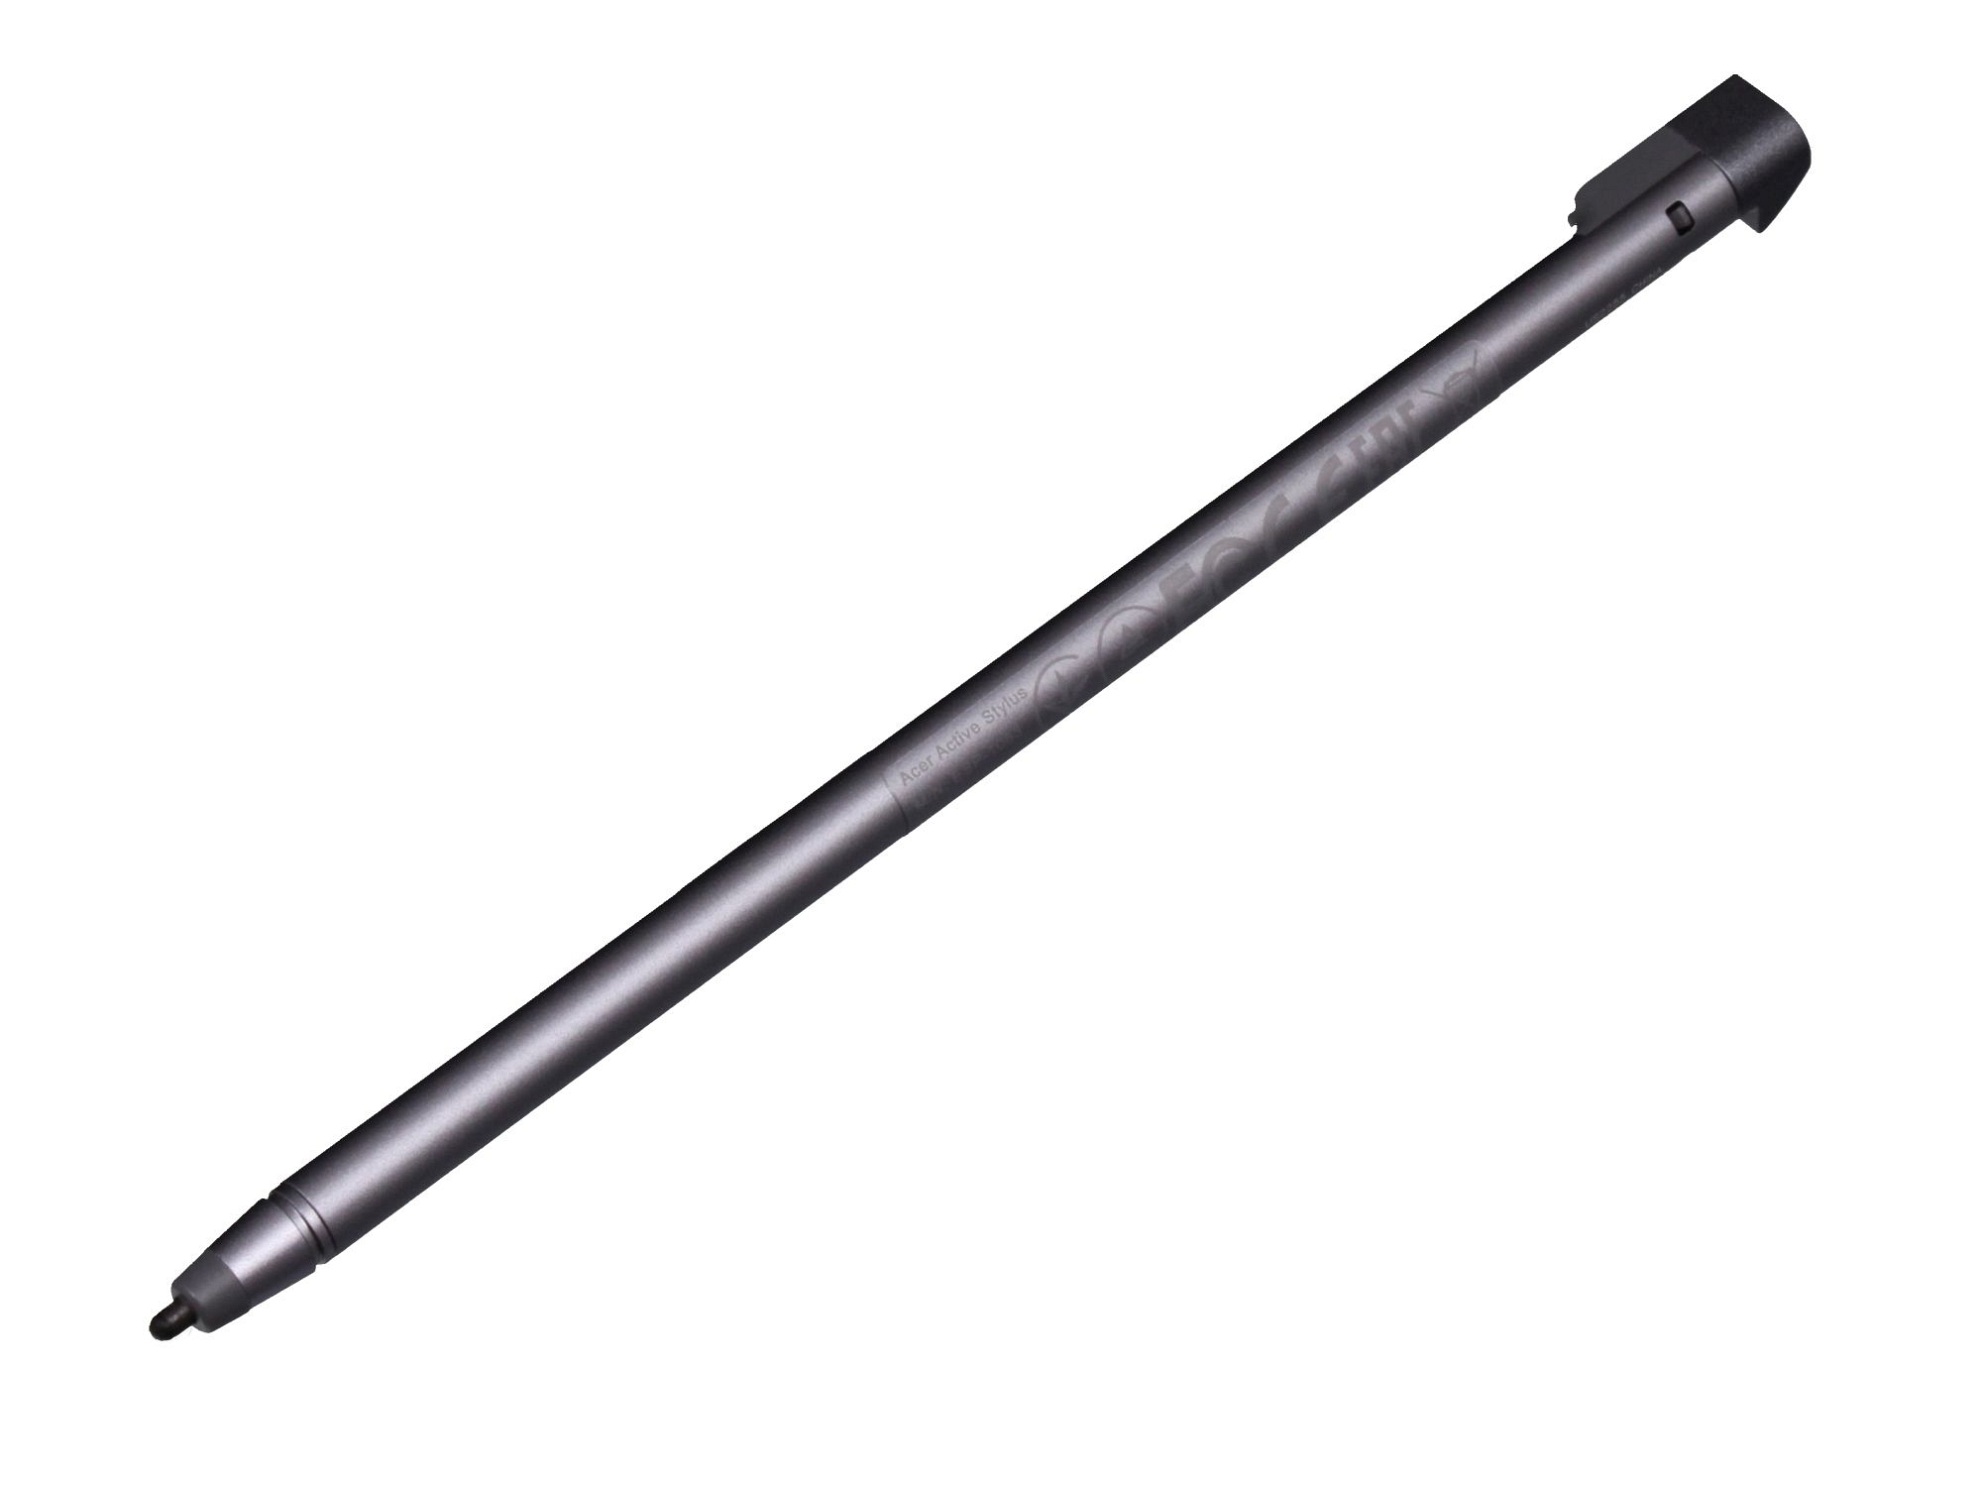 Acer ESP-1053 Stylus Pen